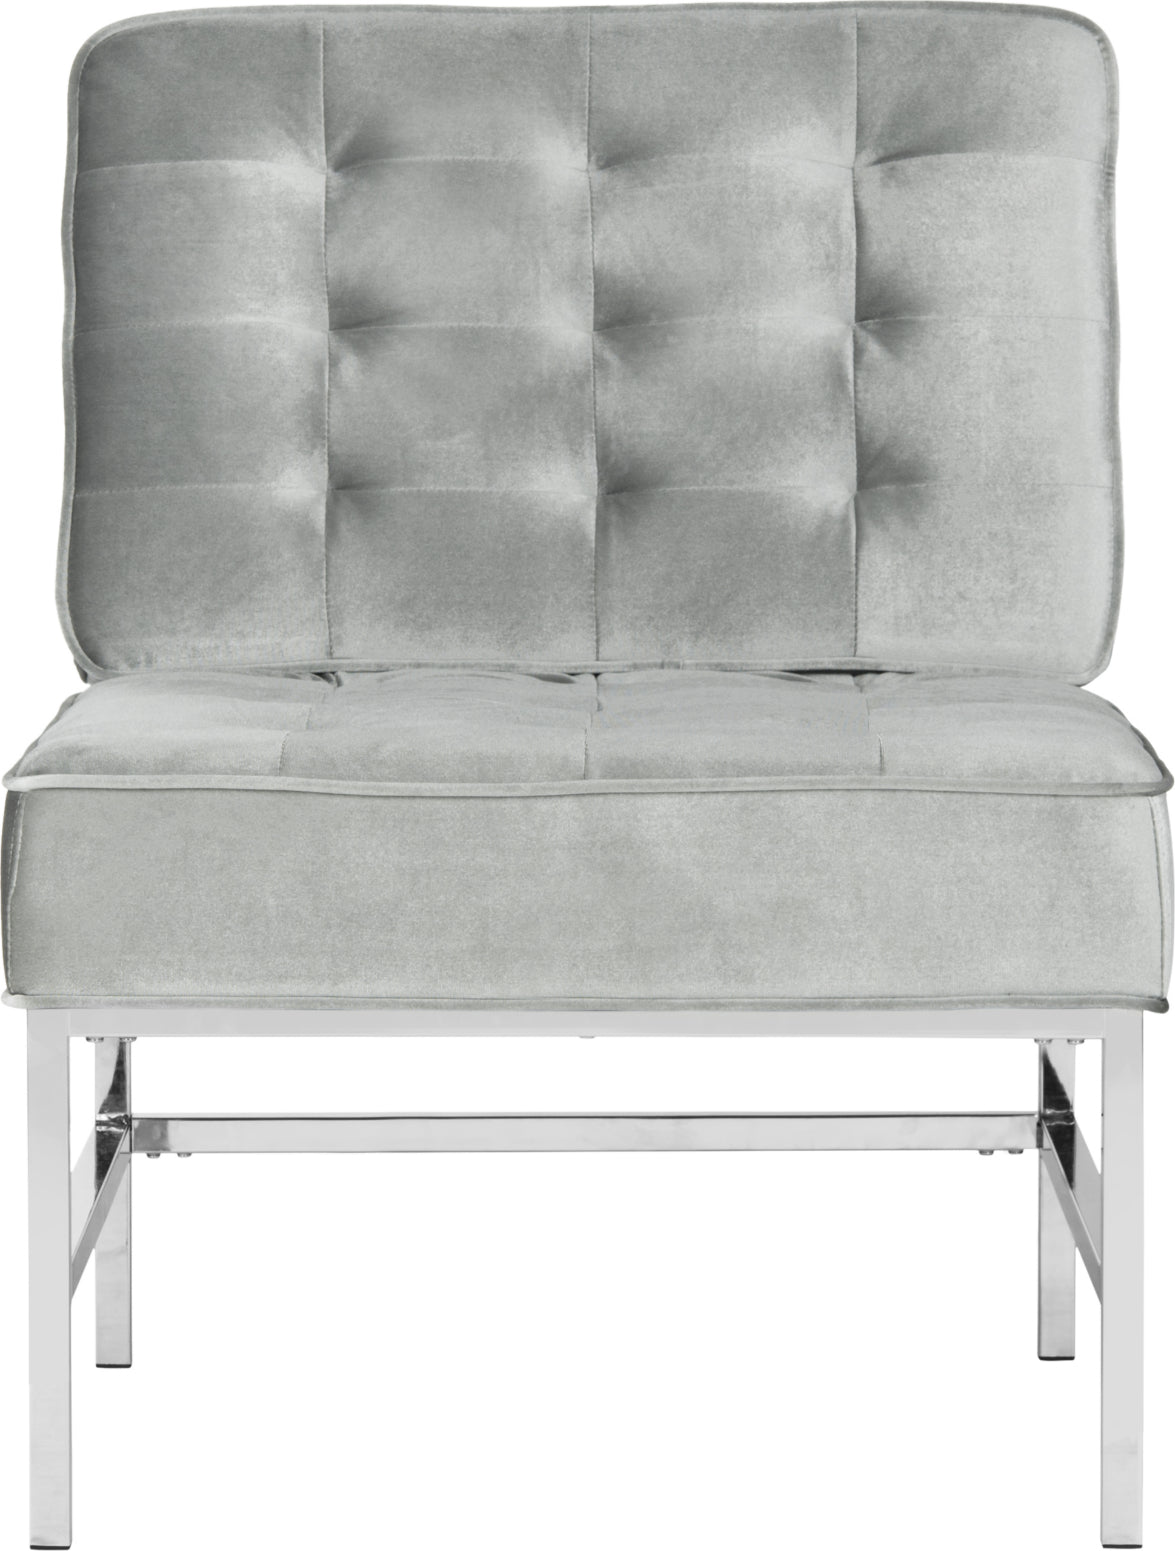 Safavieh Ansel Modern Tufted Linen Chrome Accent Chair Light Grey Furniture main image